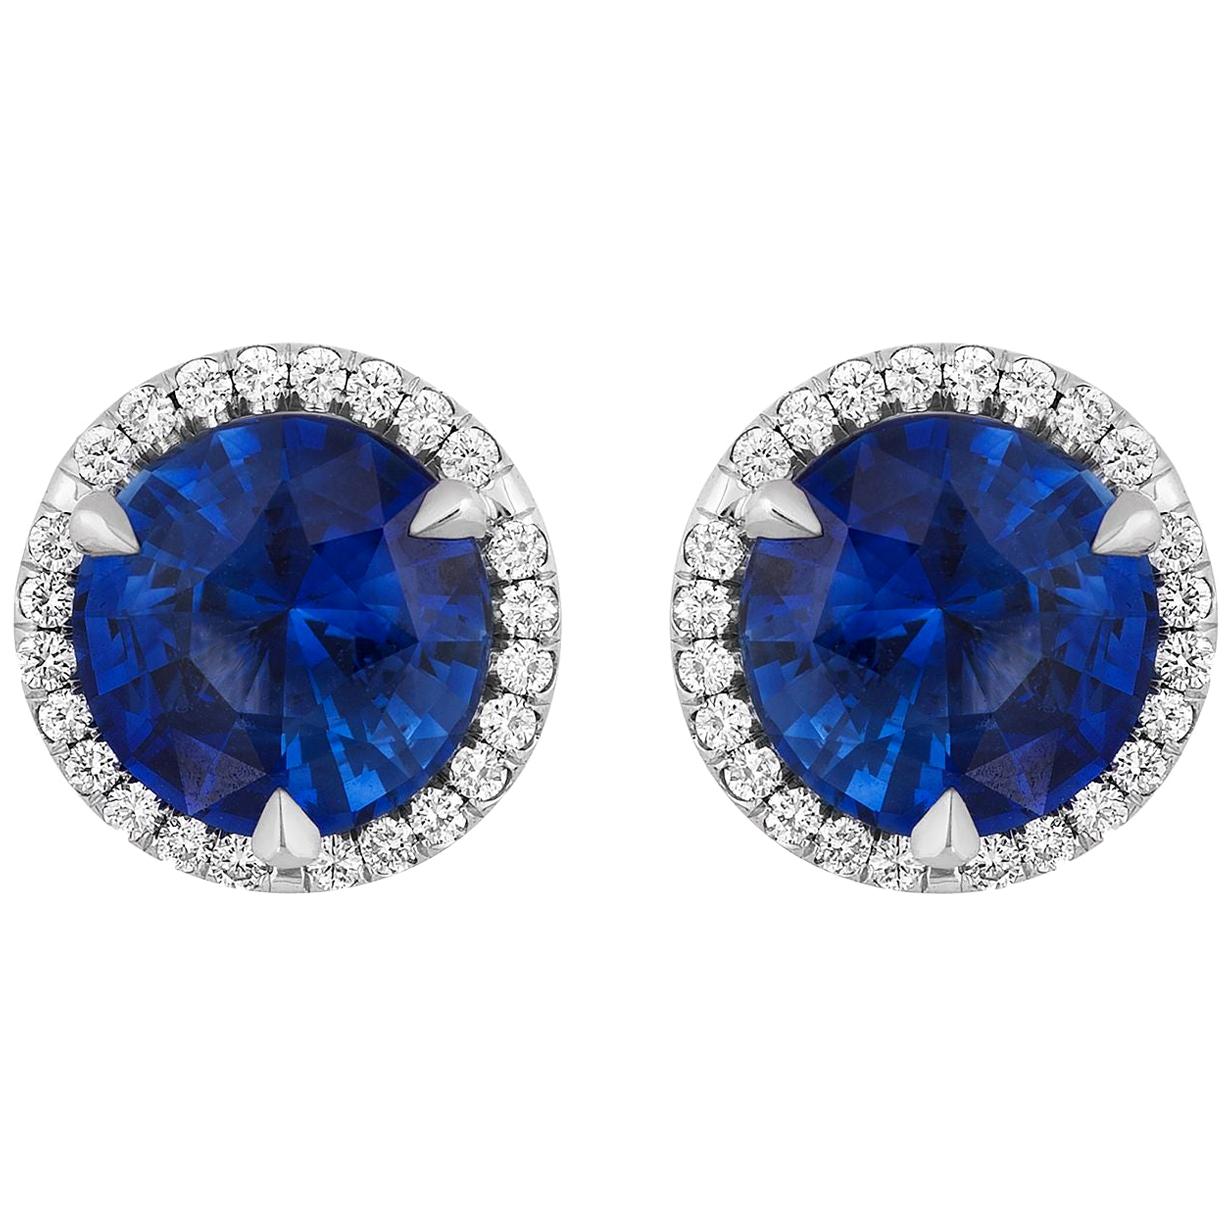 2.19 Carat Sapphire Diamond Earrings